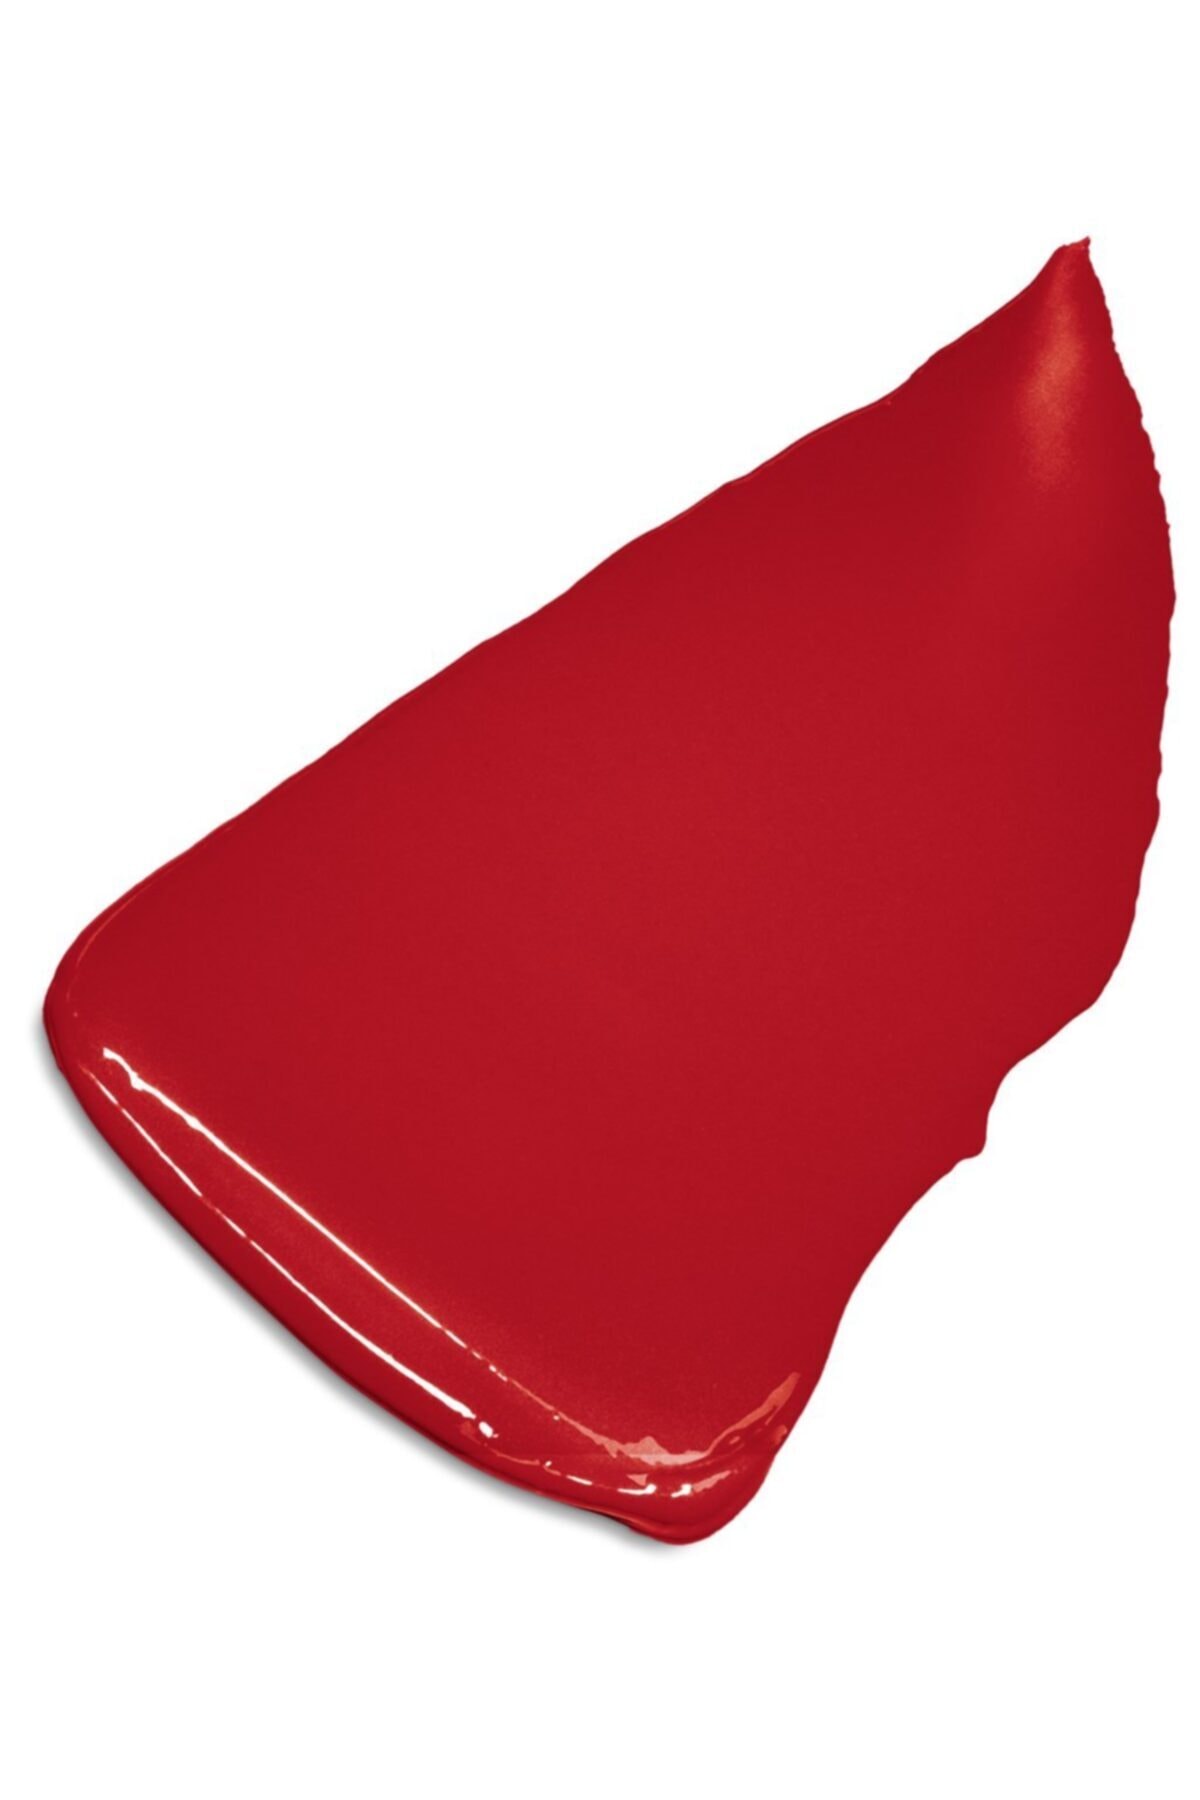 L'Oreal Paris  رژ لب Color Riche طرح ویژه ولنتاین و روز زن شماره 125 رنگ قرمز